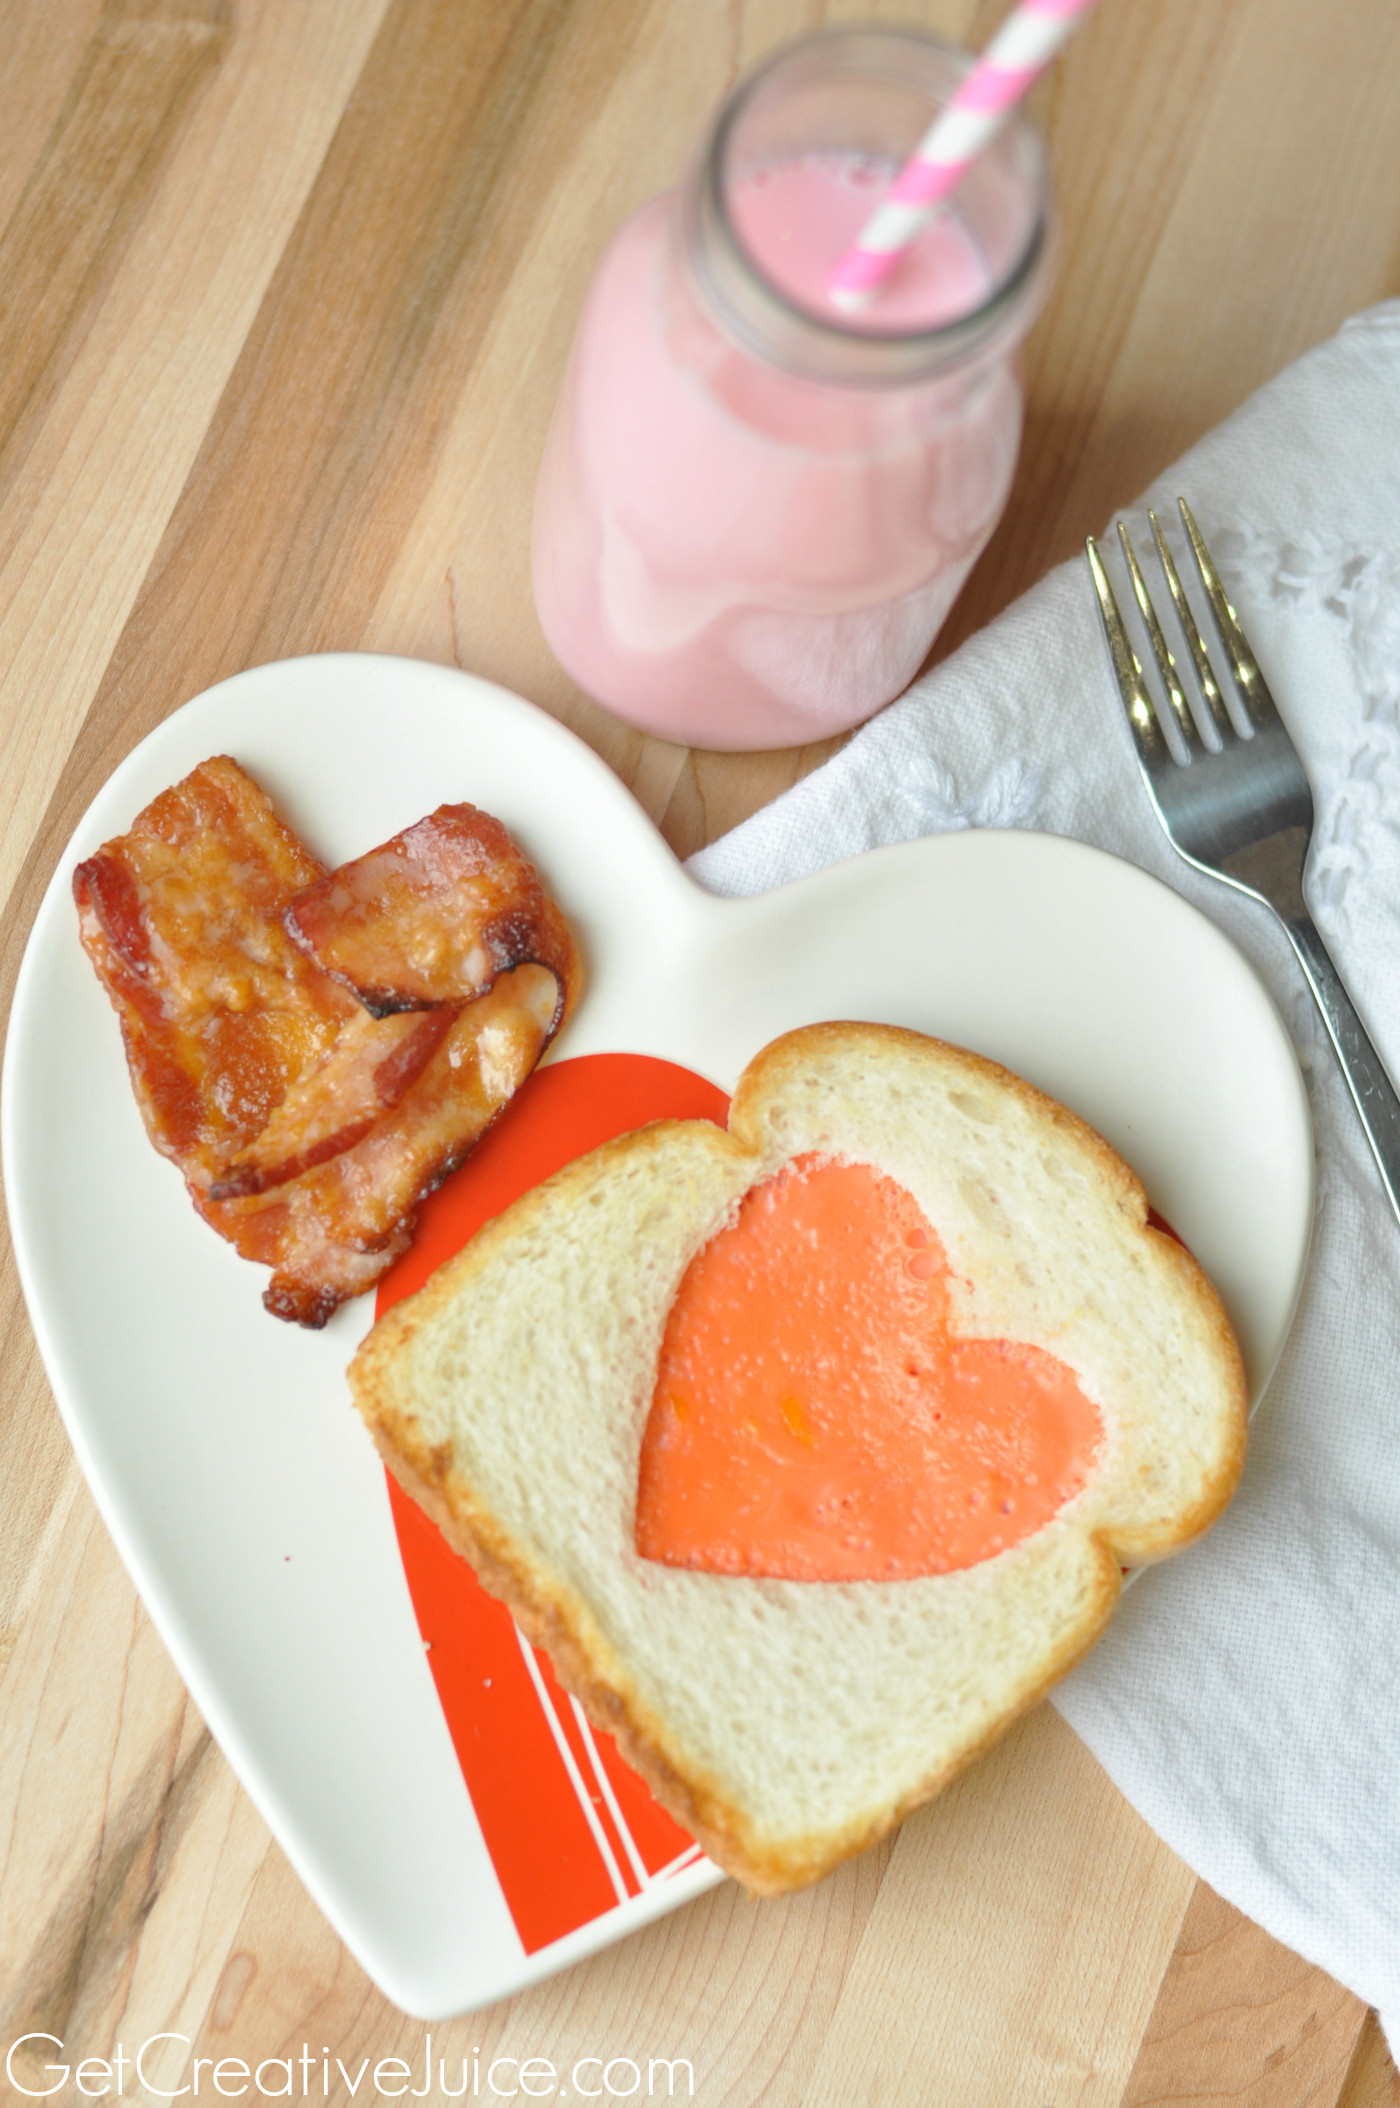 Valentine'S Day Breakfast Recipes
 Valentine s Day Breakfast Ideas Creative Juice